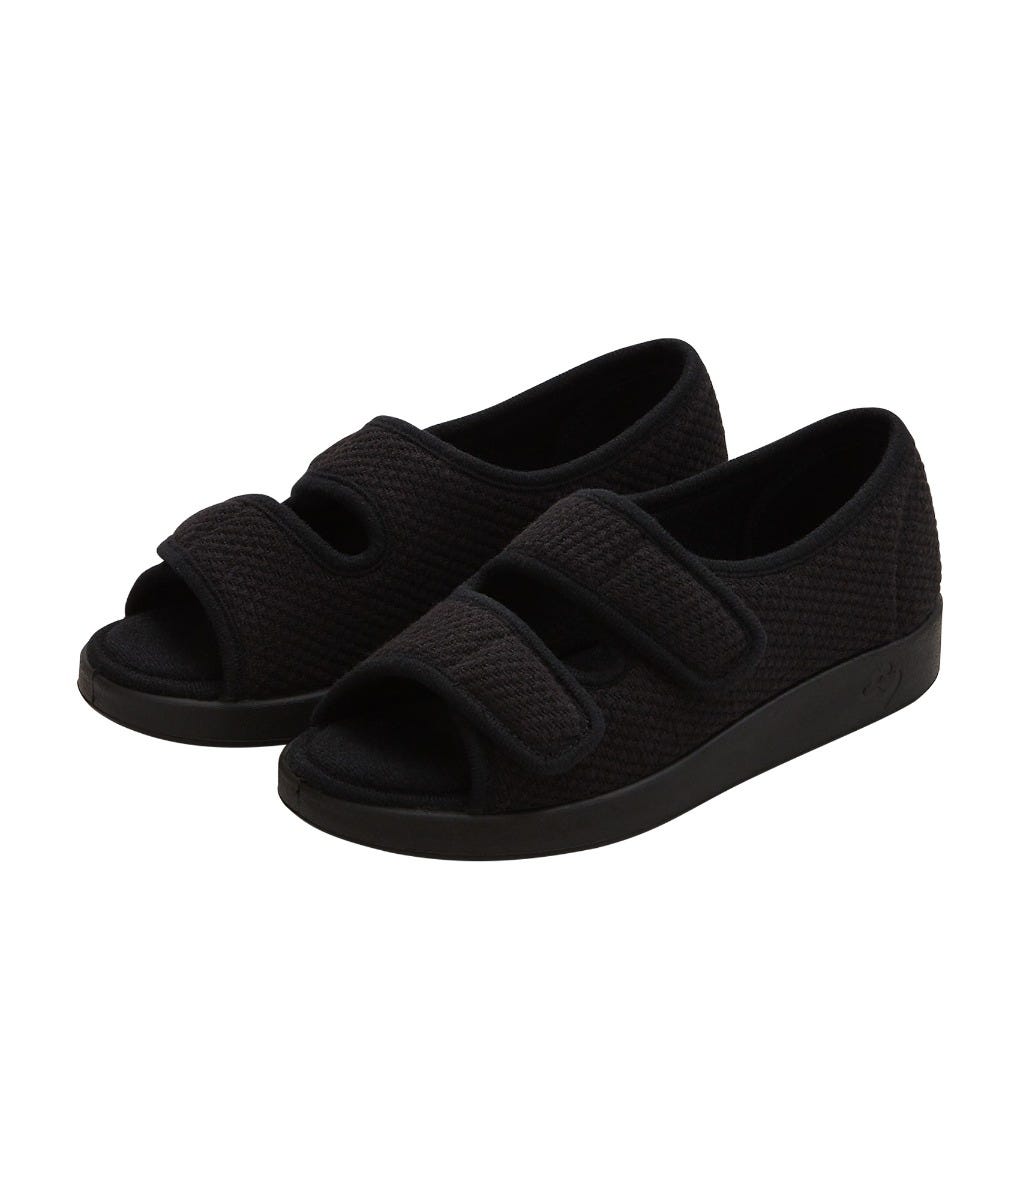 Silverts Women's Easy Closure Sandals - Black - 5